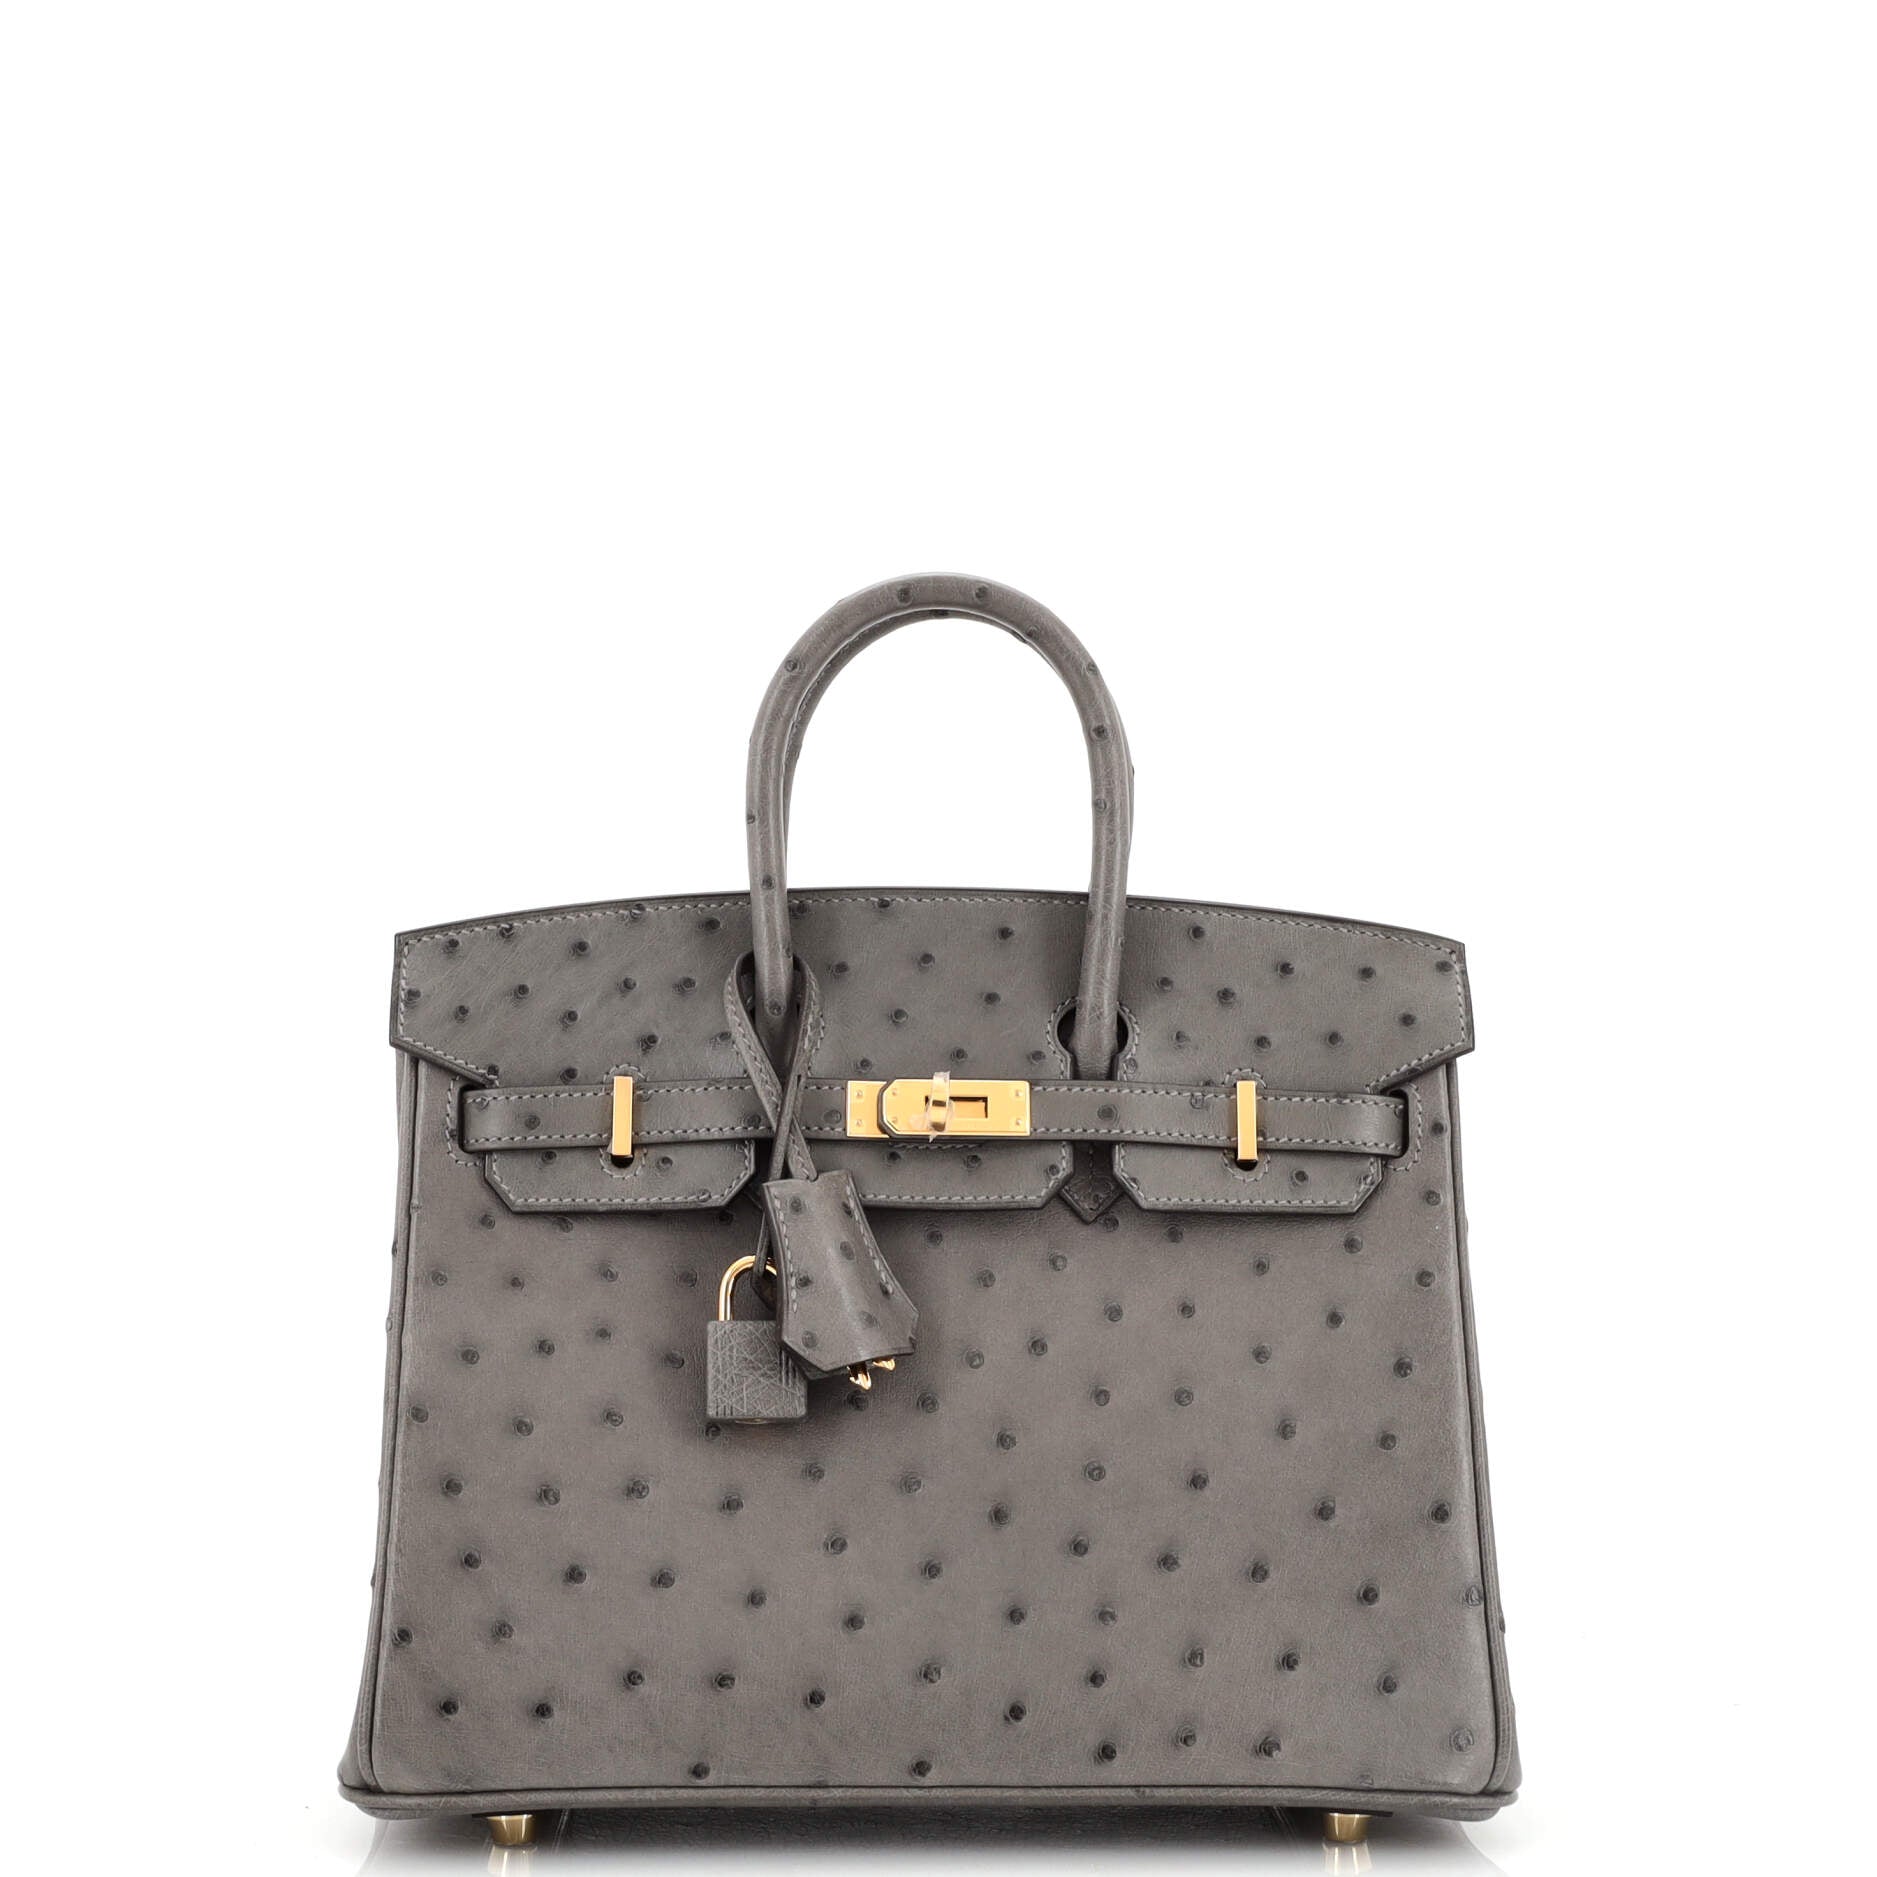 Hermes Kelly Handbag Grey Ostrich with Gold Hardware 25